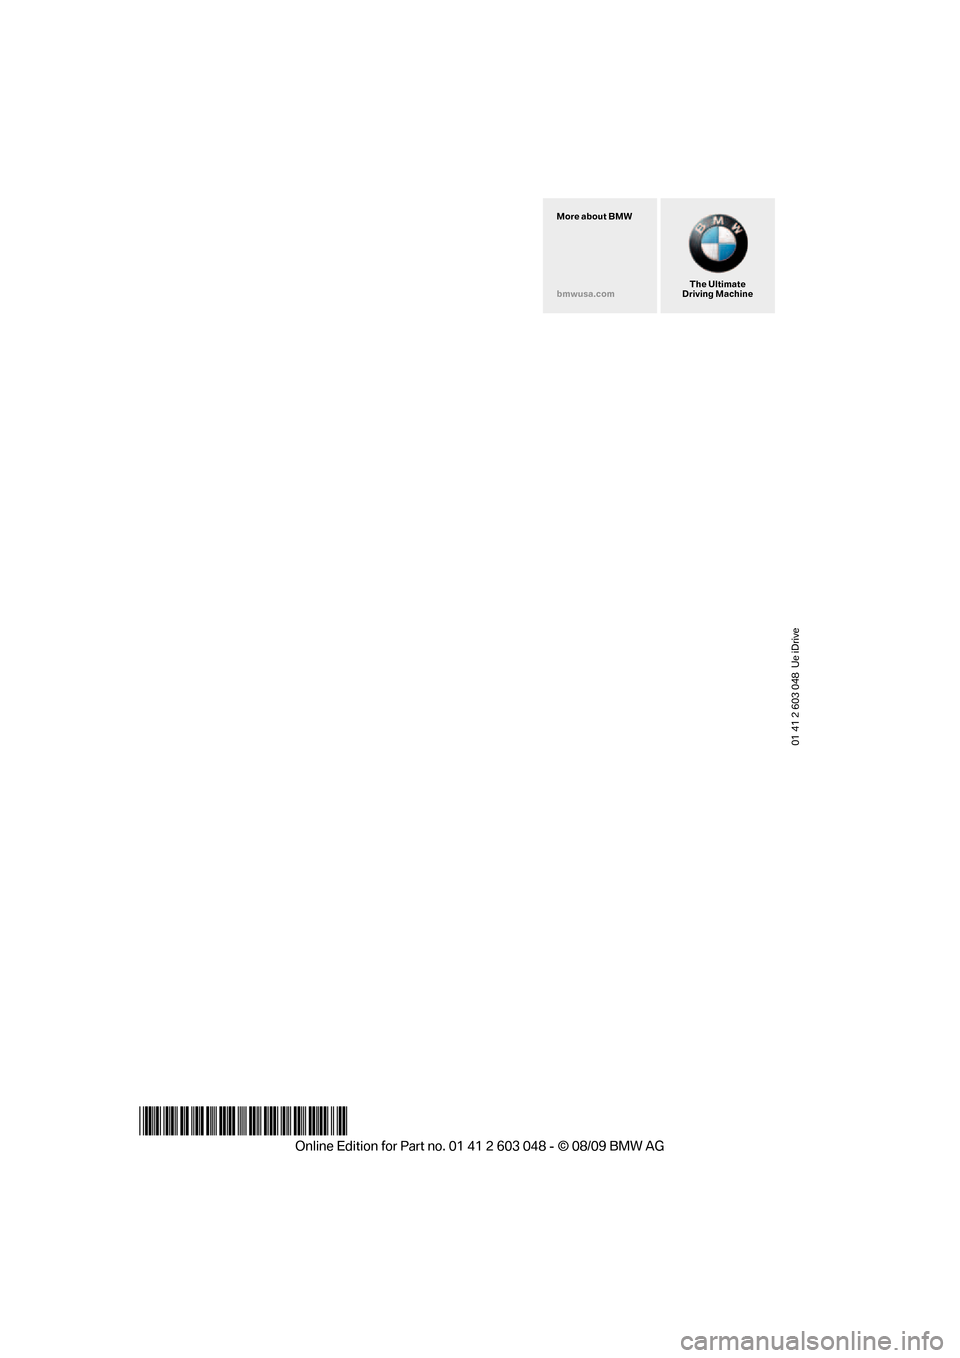 BMW 335I SEDAN 2010 E90 Owners Manual 01 41 2 603 048  Ue iDrive
*BL260304800P*
The Ultimate
Driving Machine More about BMW
bmwusa.com 